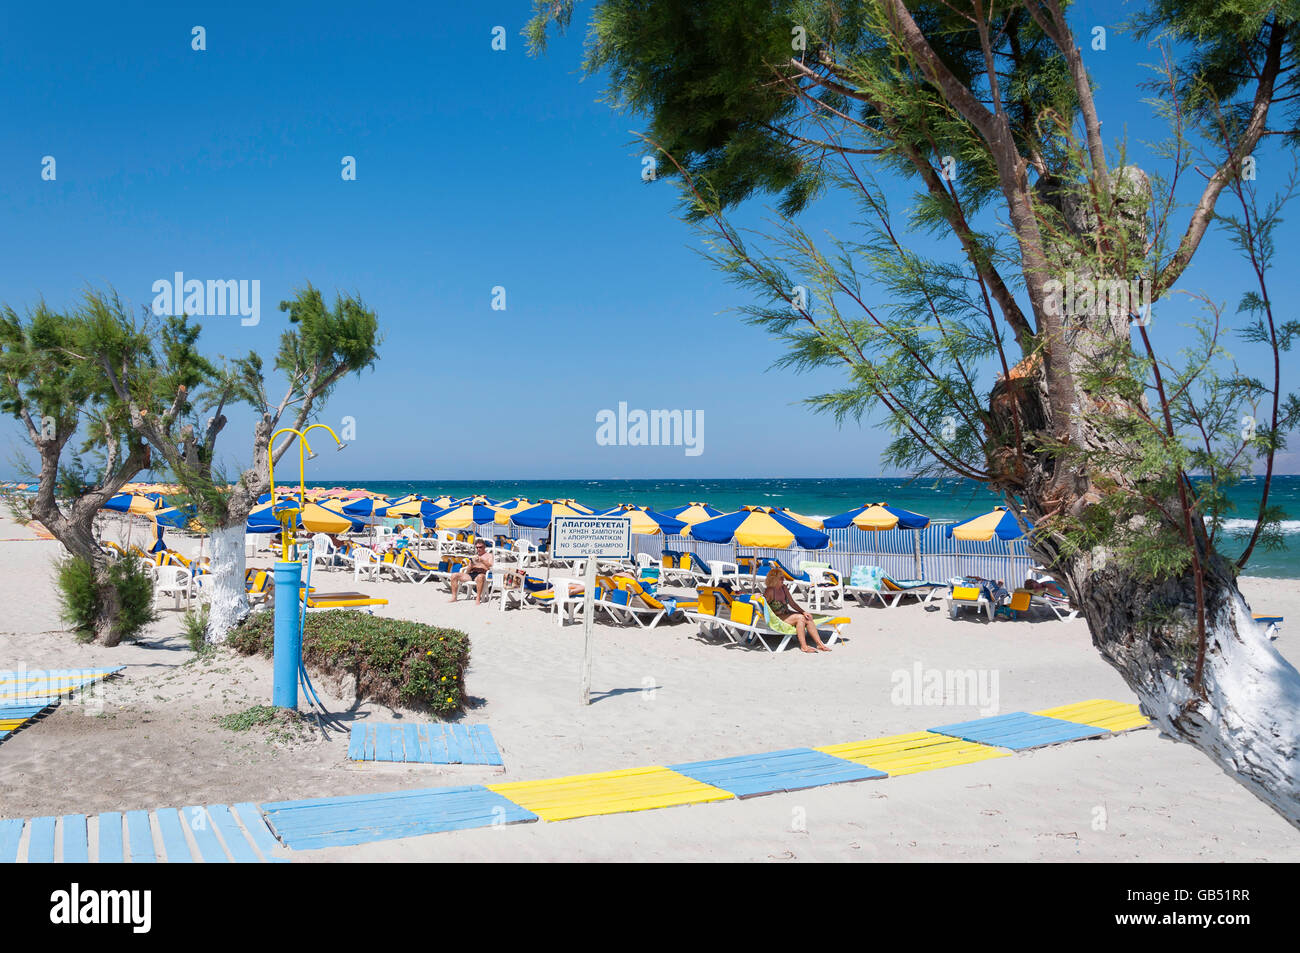 Marmari Beach, Marmari, Kos (Cos), The Dodecanese, South Aegean Region, Greece Stock Photo